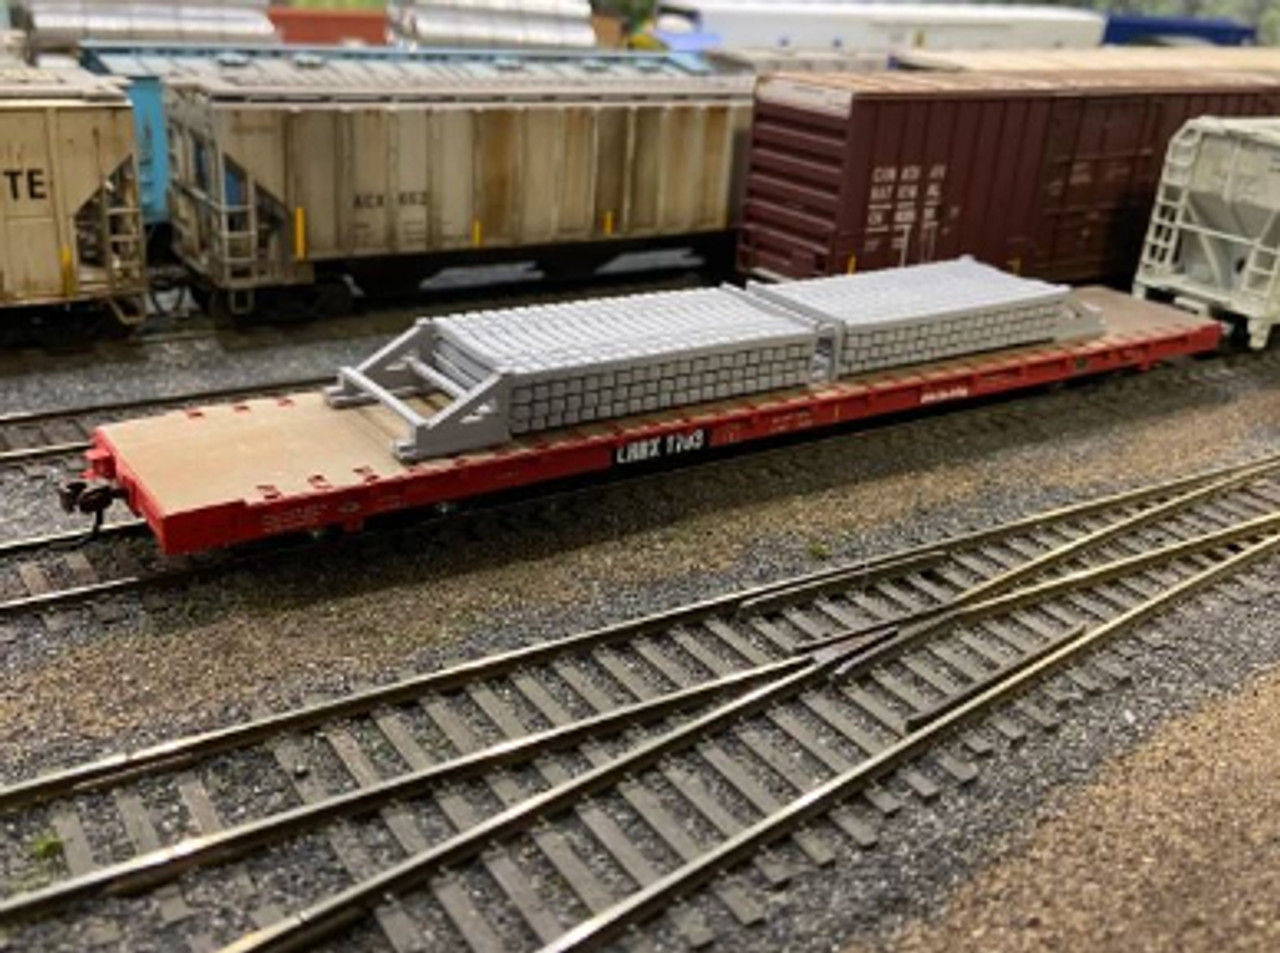 Train Ho 1/87 Scale Length 50 cm Metal Track Model Railway